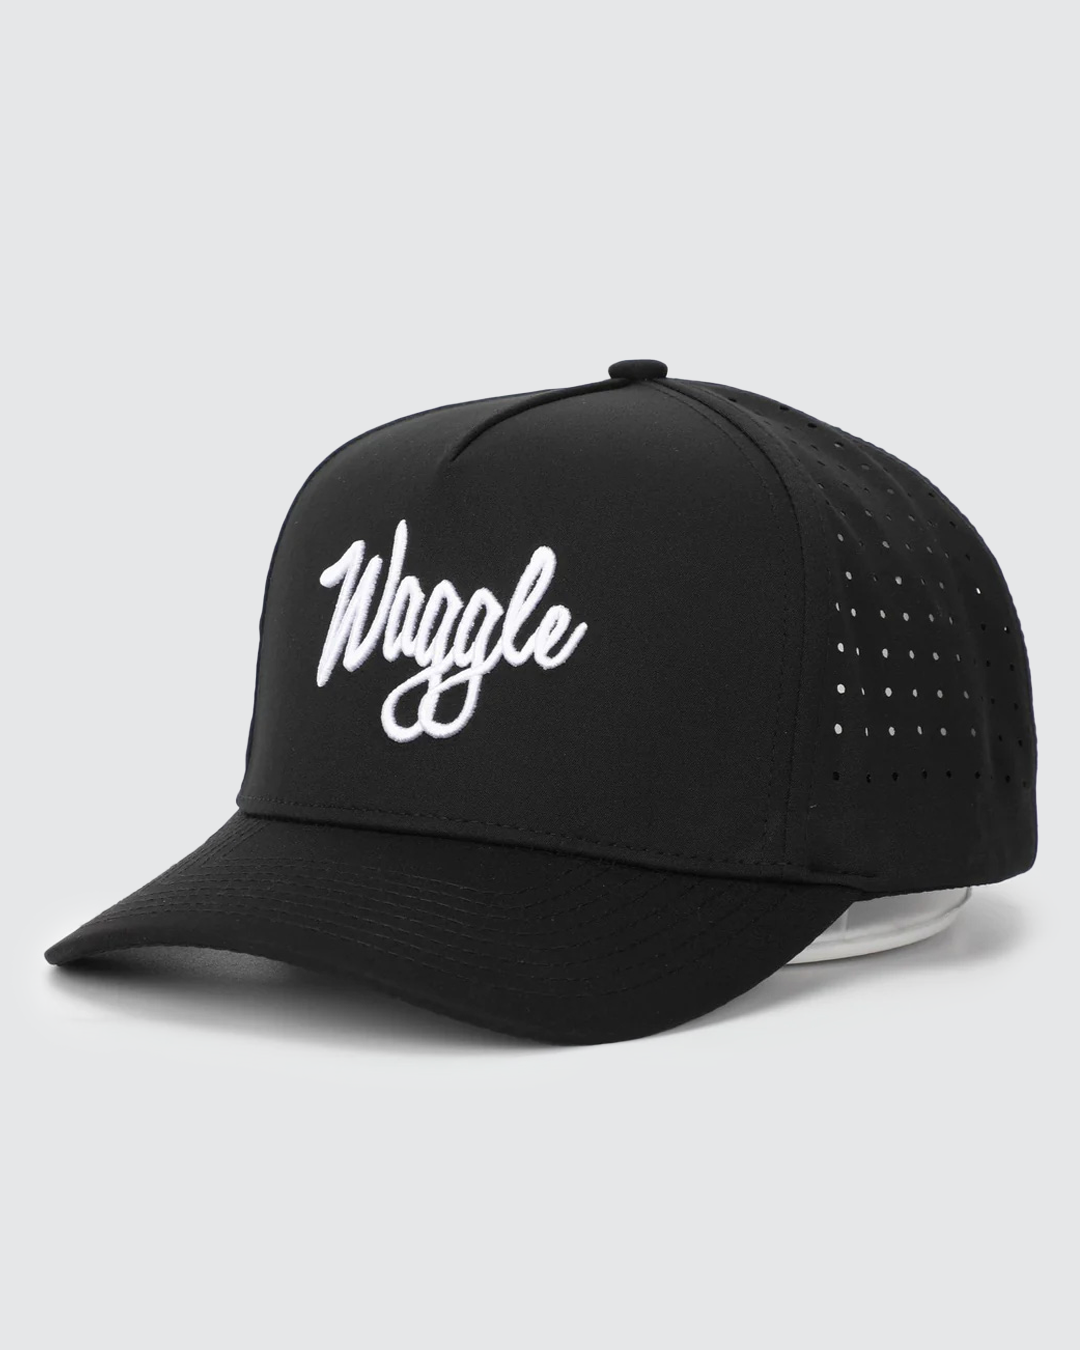 Waggle Men's Logo Golf Hat, Black